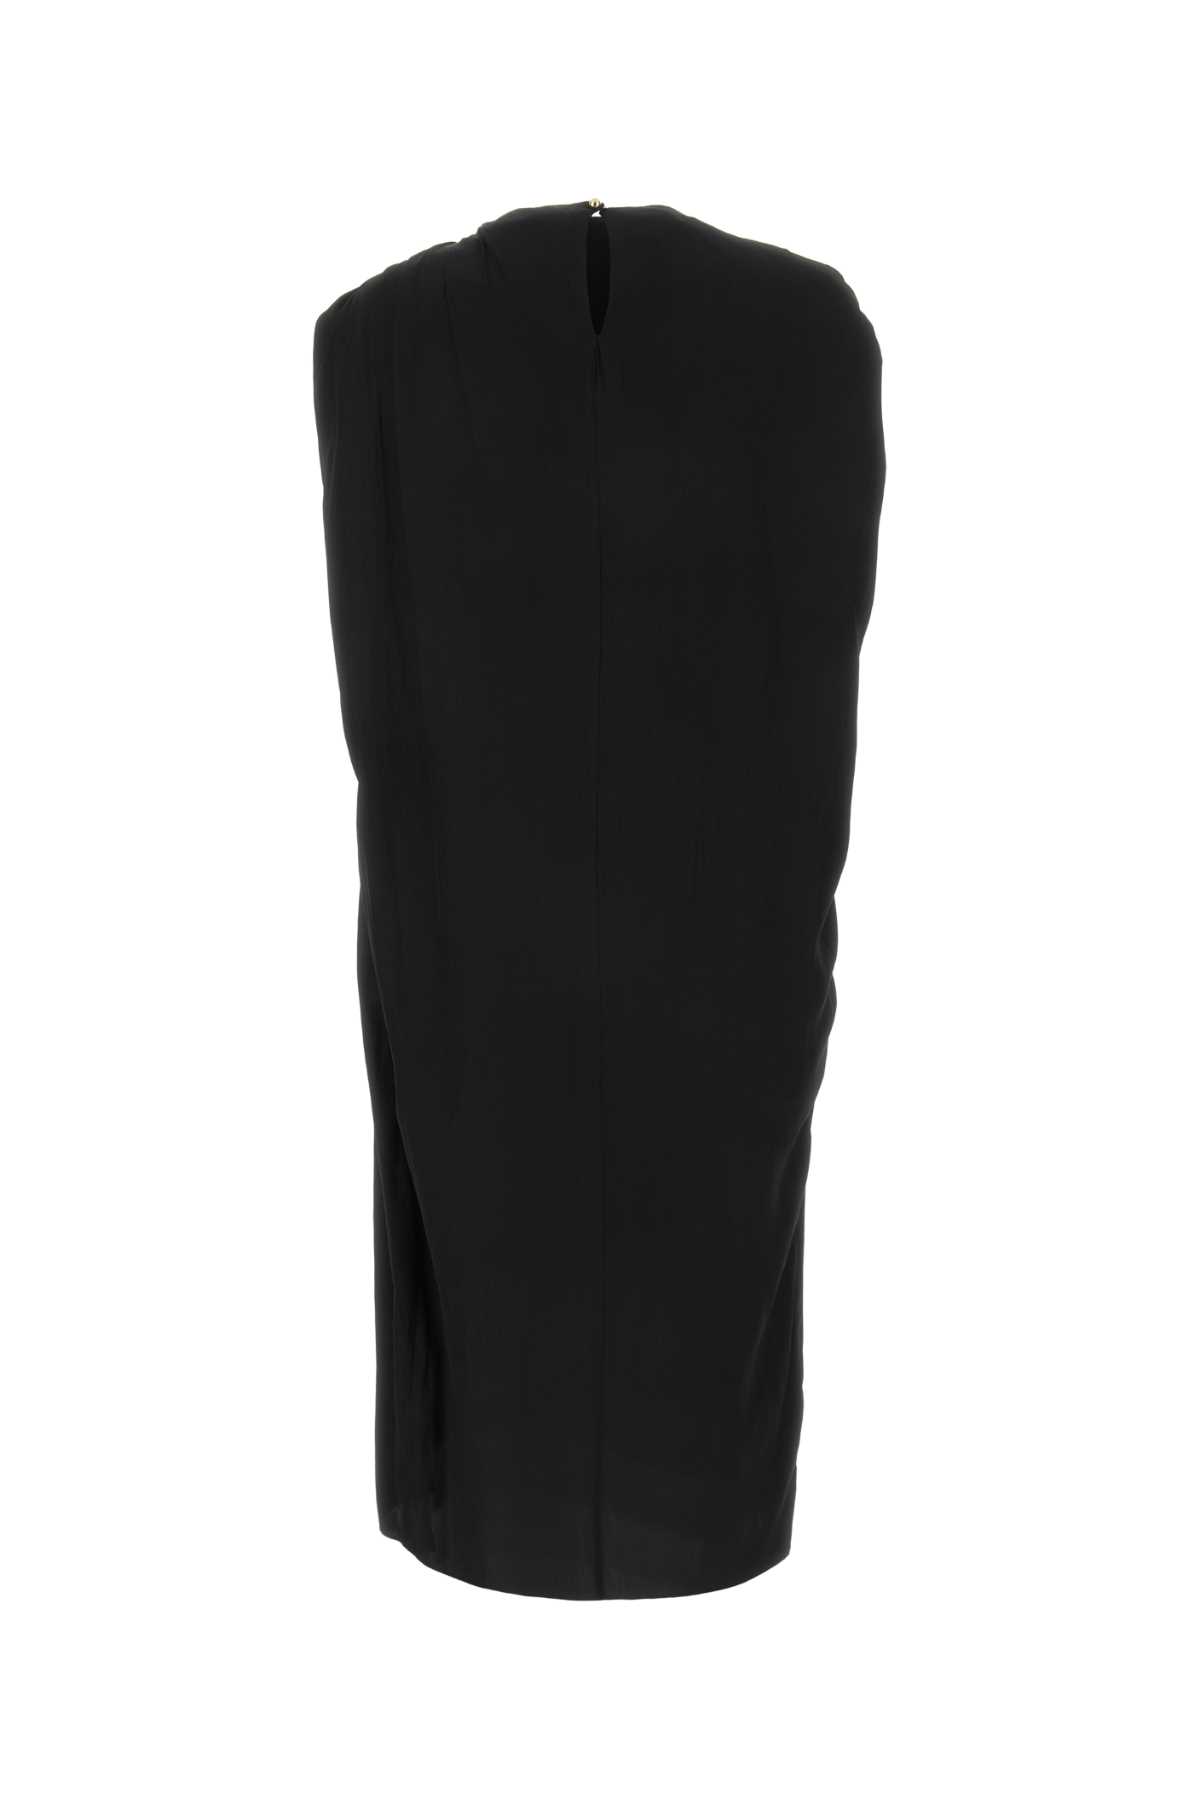 Lanvin Black Jersey Dress